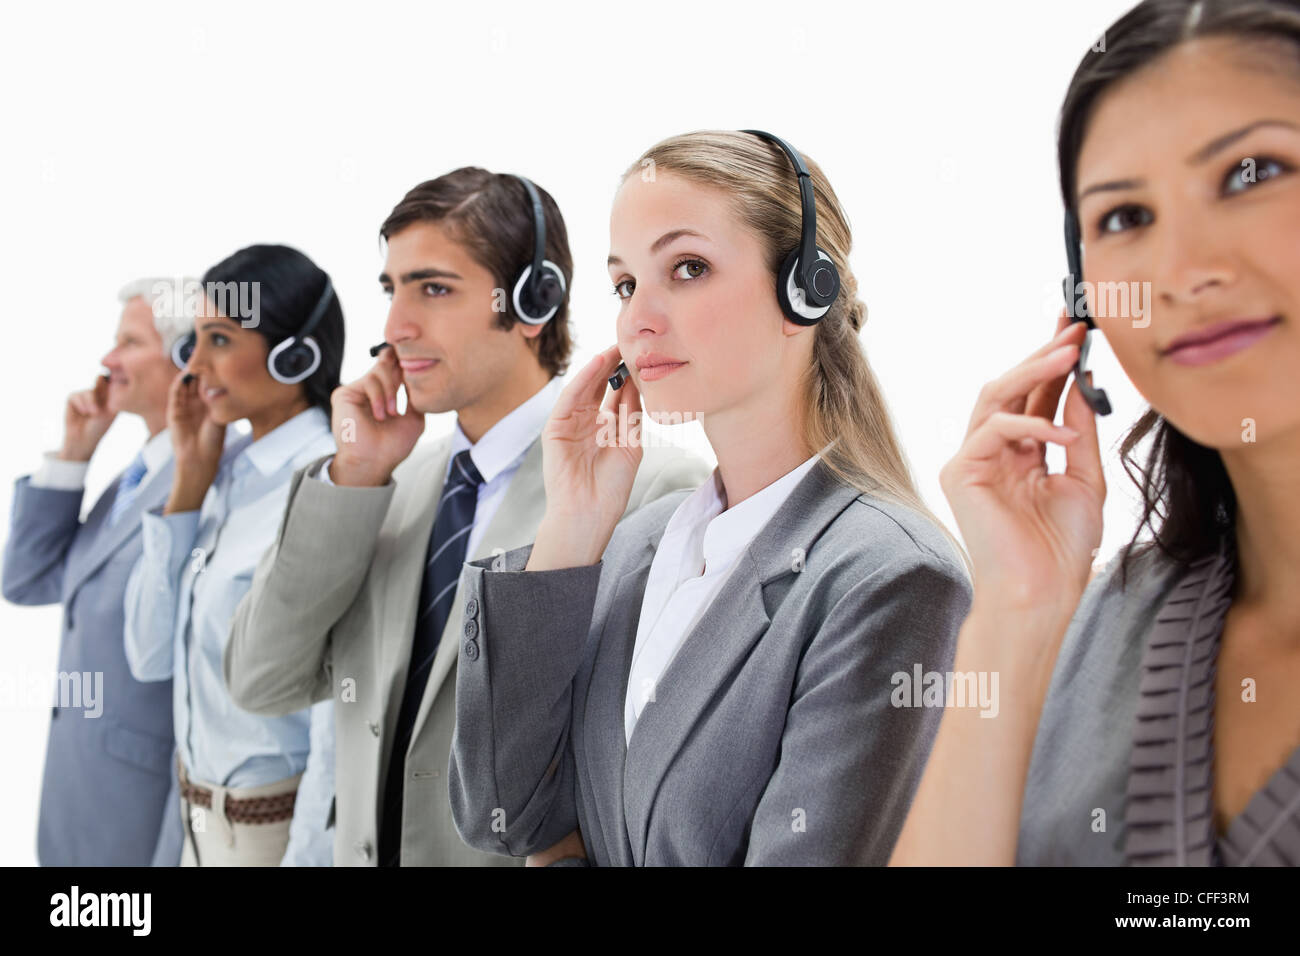 Professionals listening carefully Stock Photo